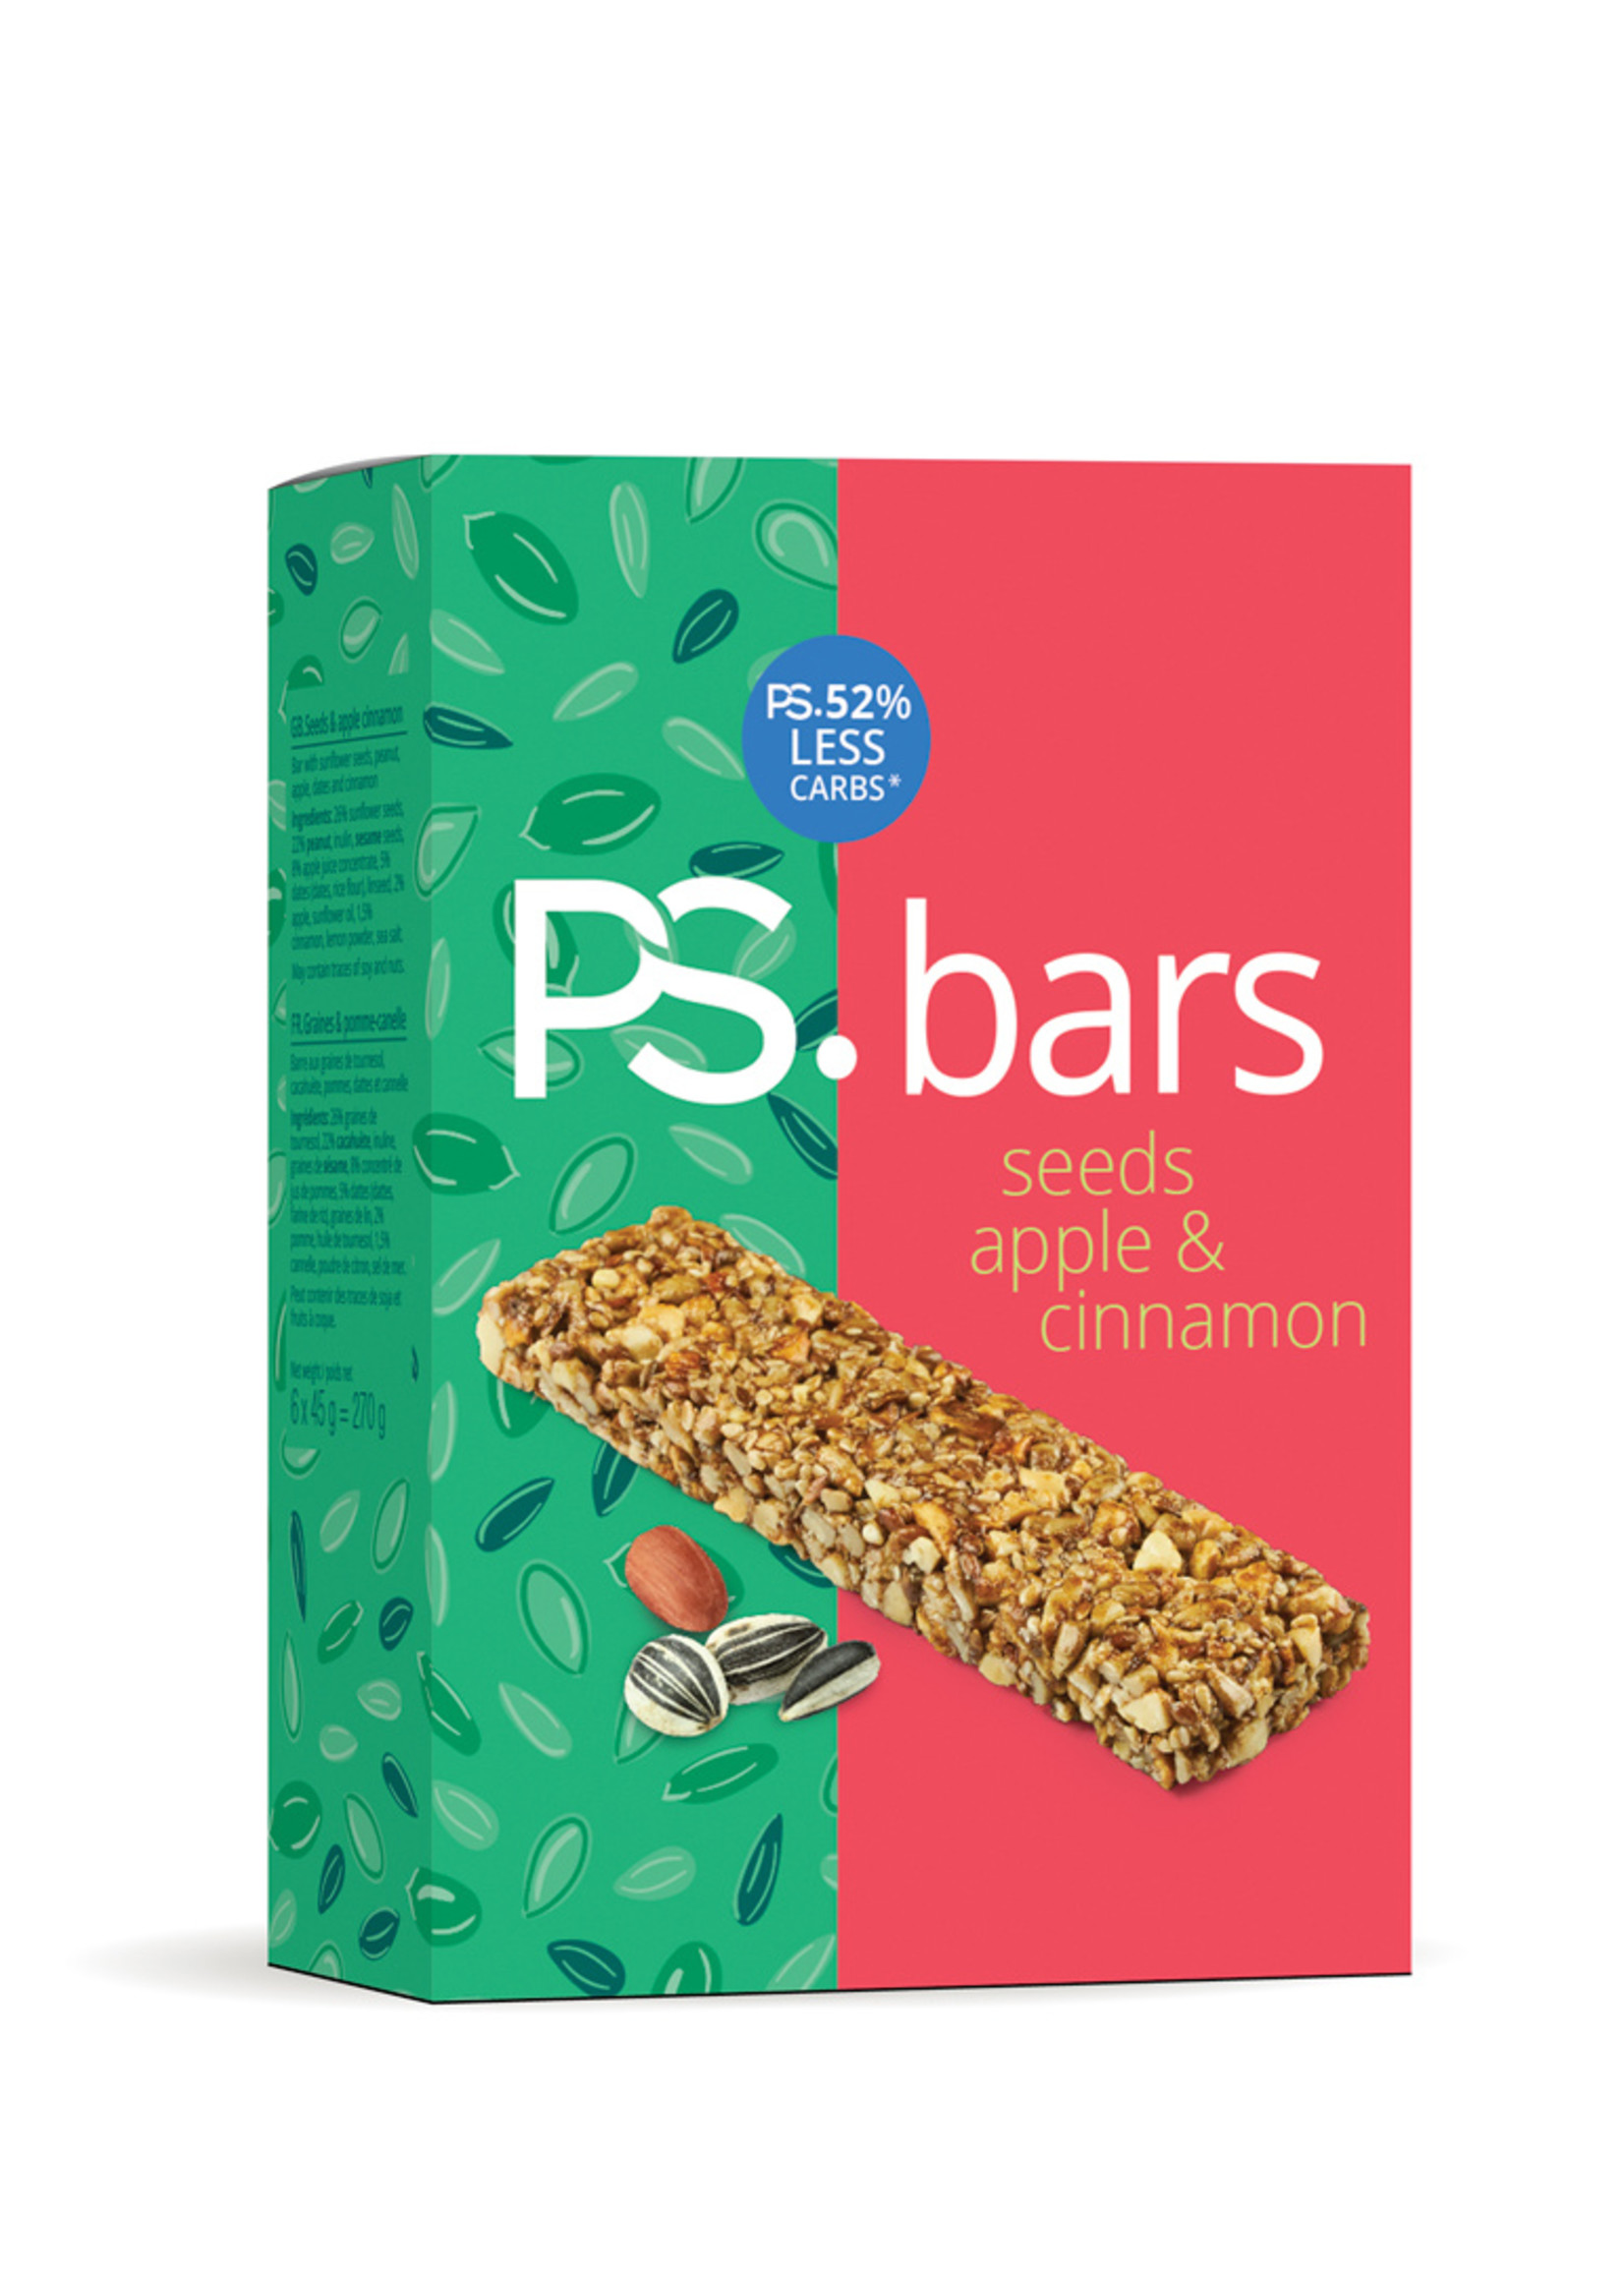 PS seeds apple & cinnamon bar